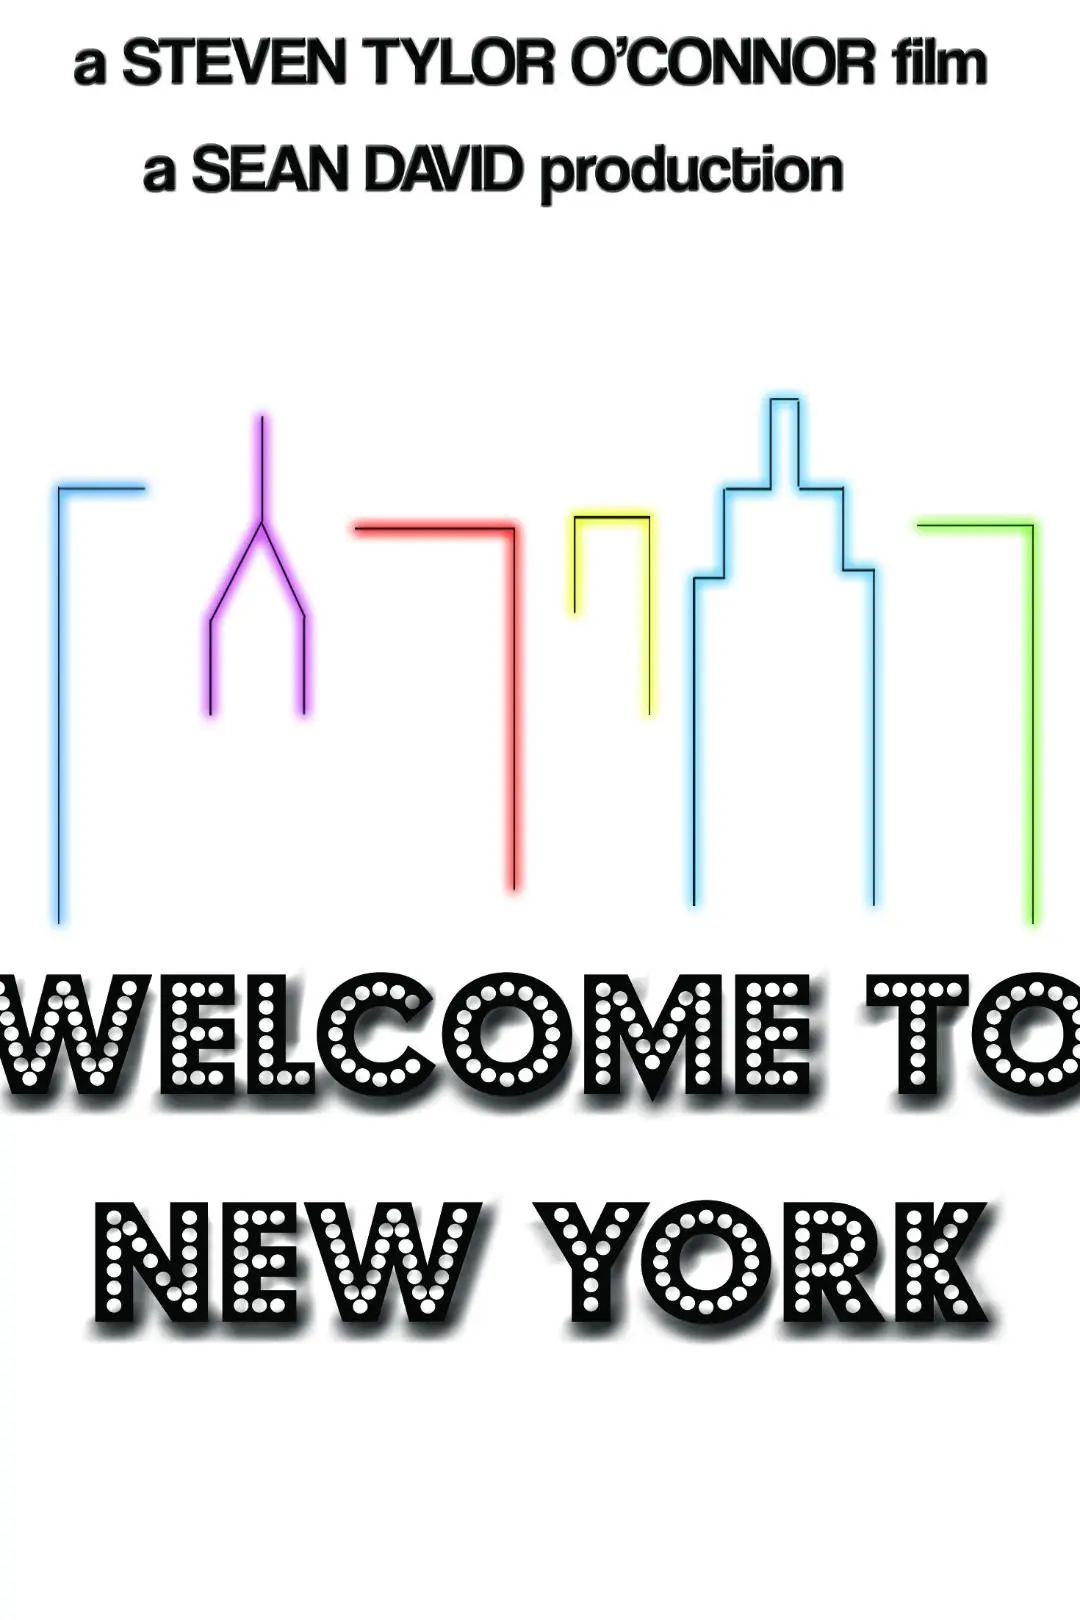 Welcome to New York_peliplat